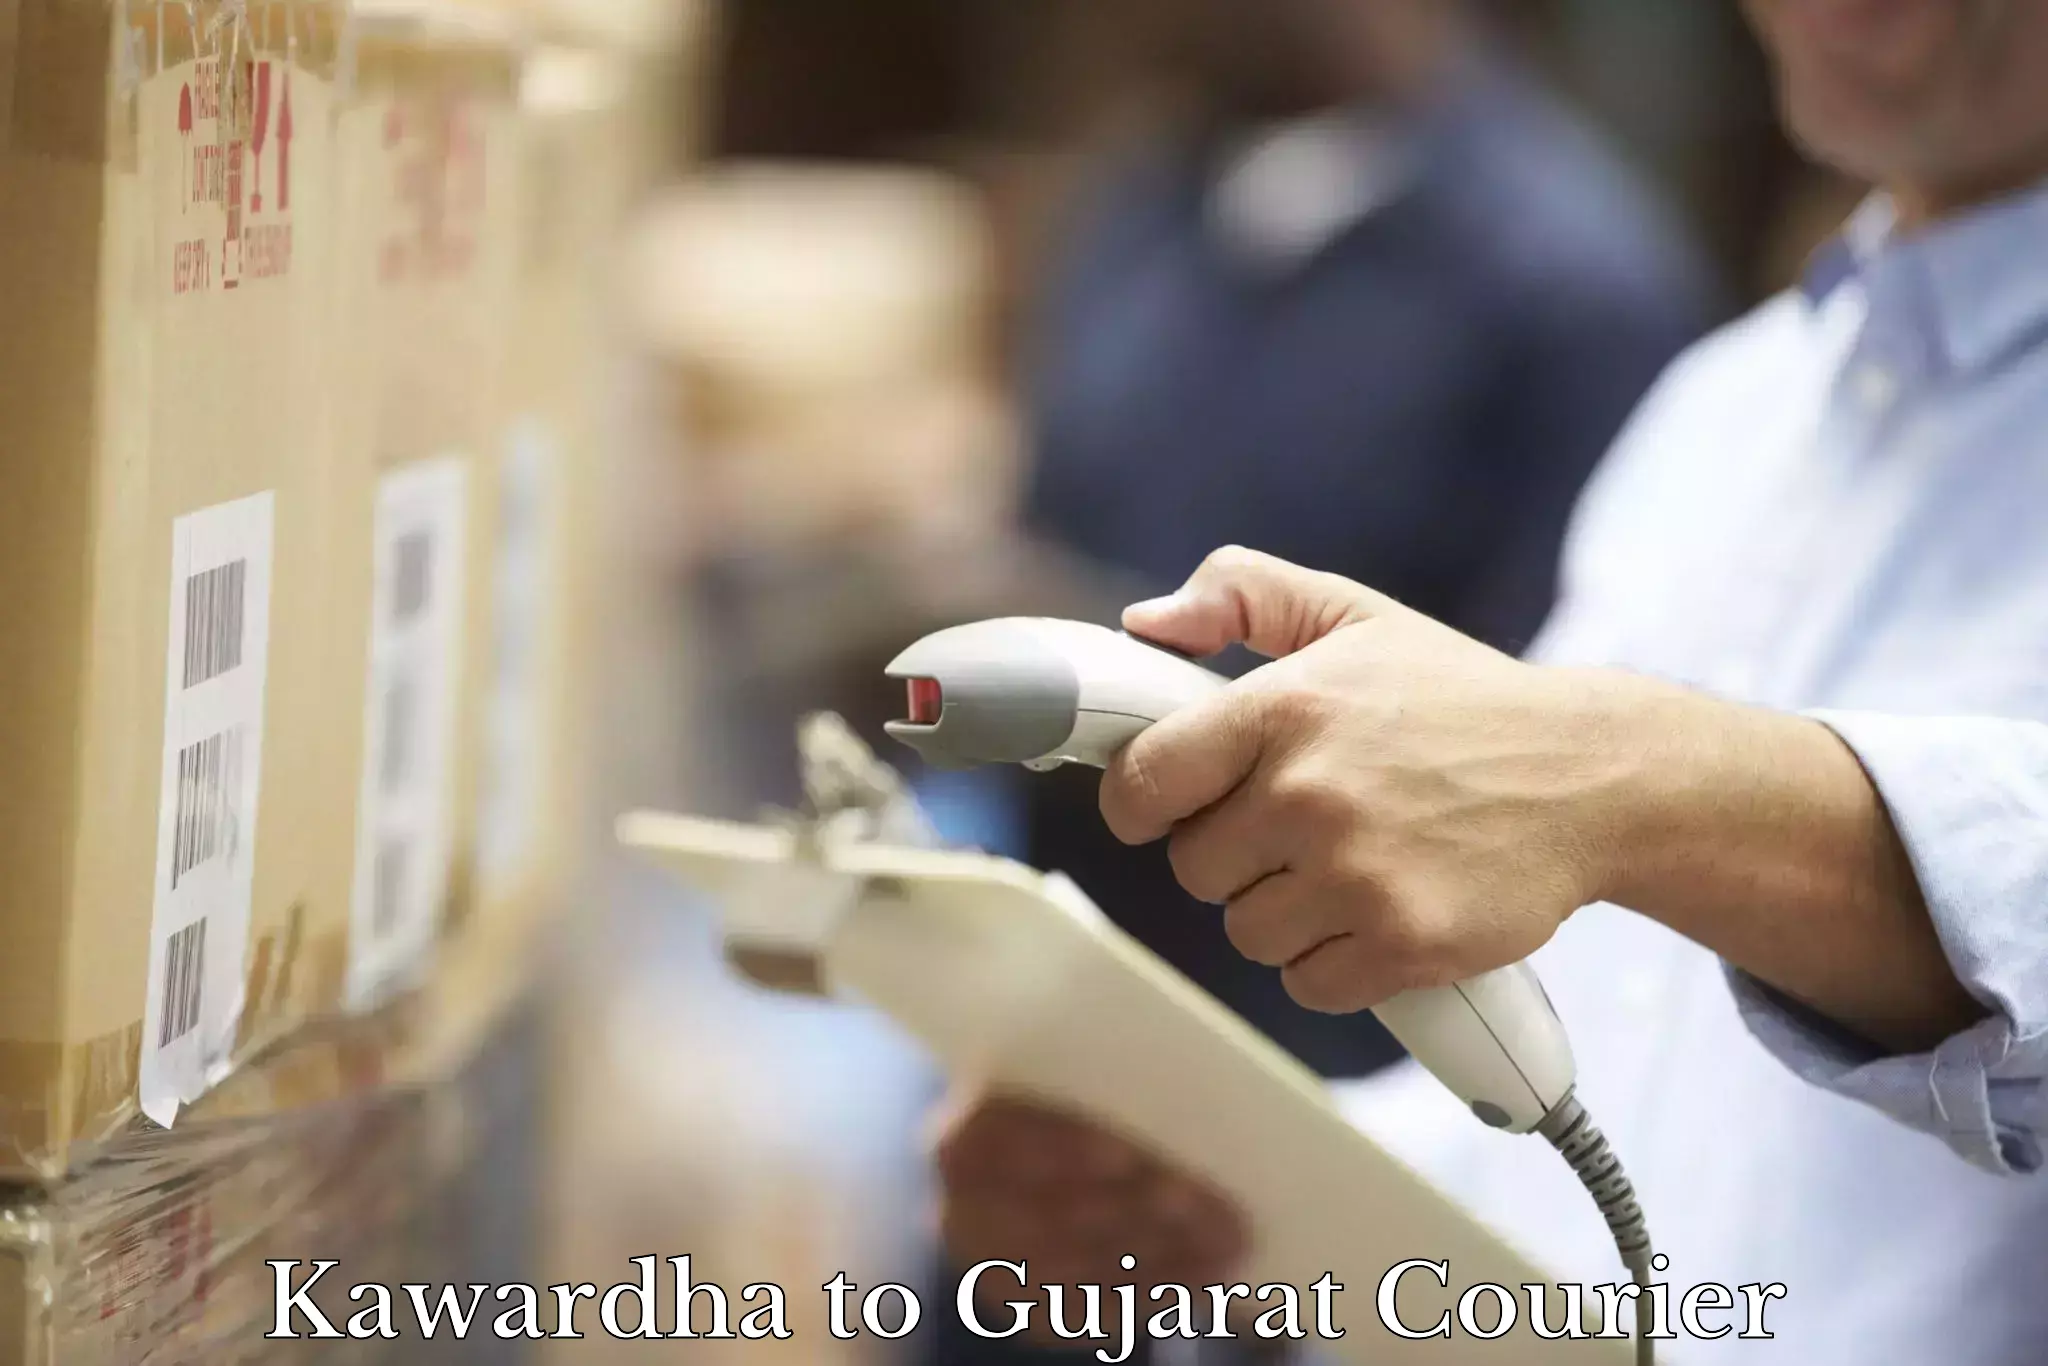 Express delivery capabilities Kawardha to Dwarka